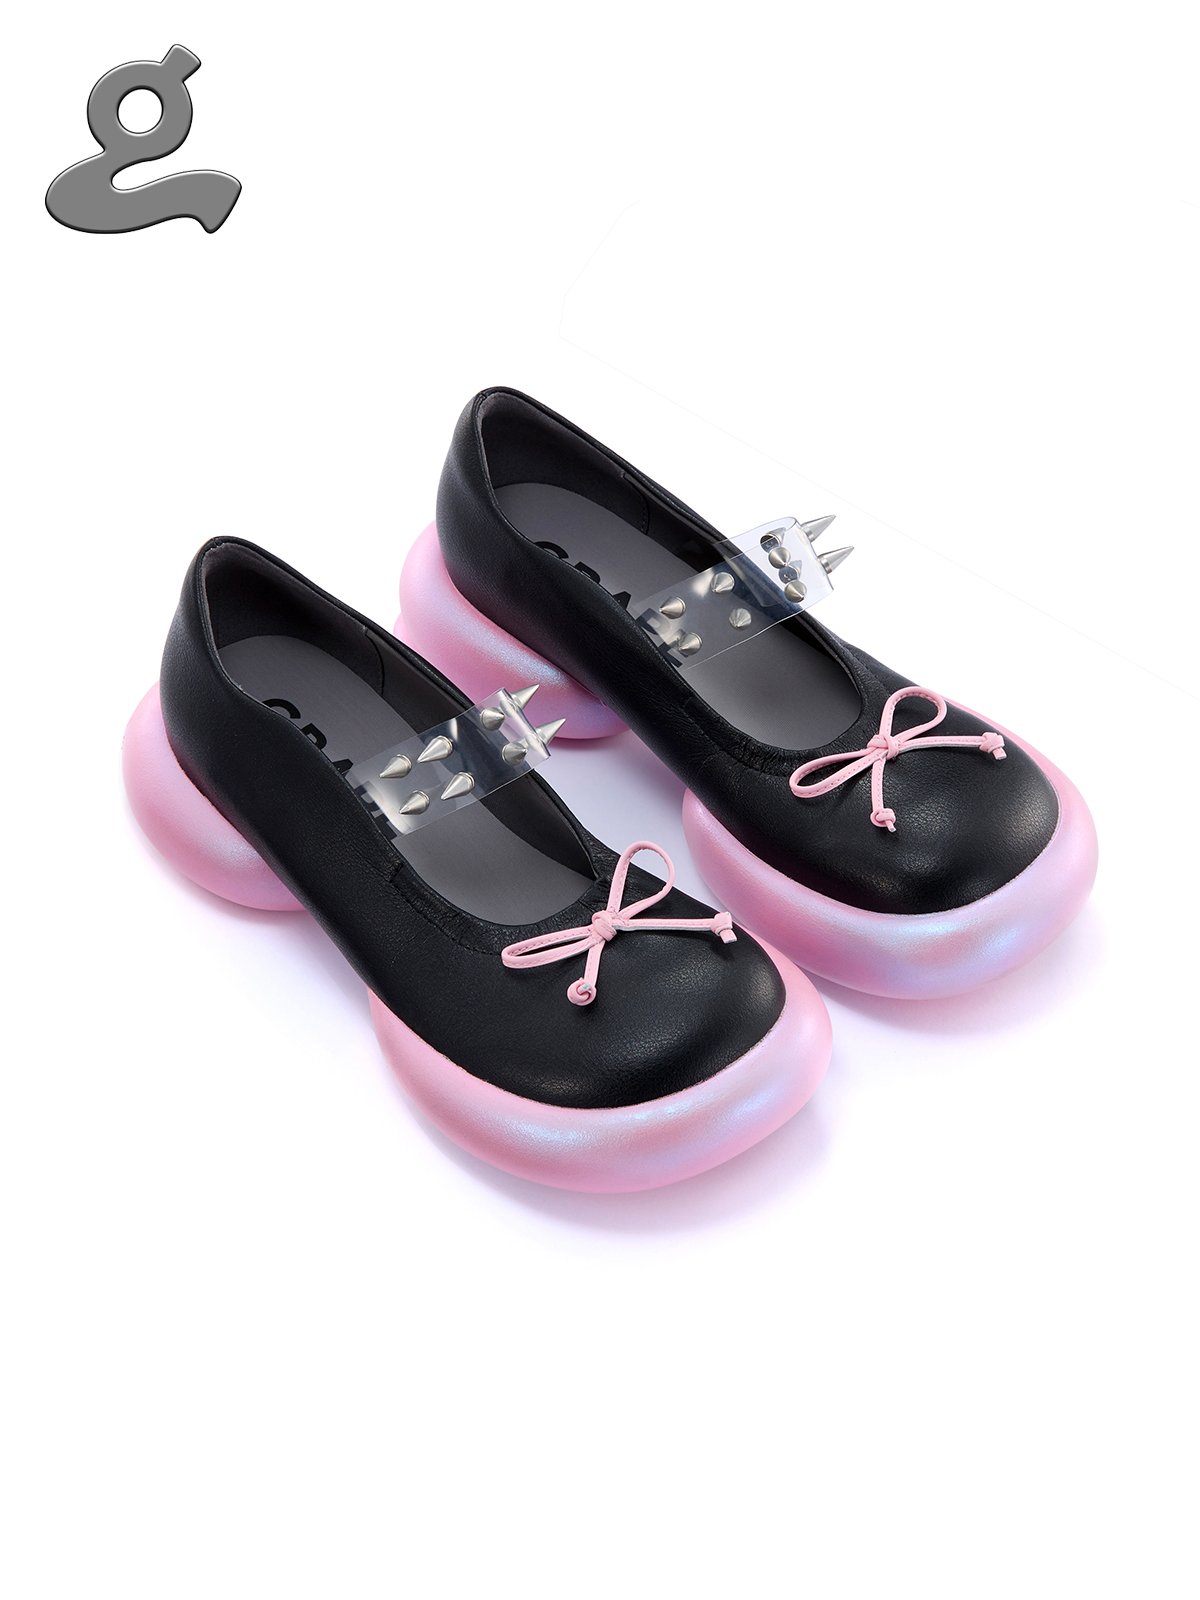 Image of Black/Pink Rivet Mary Jane Shoes